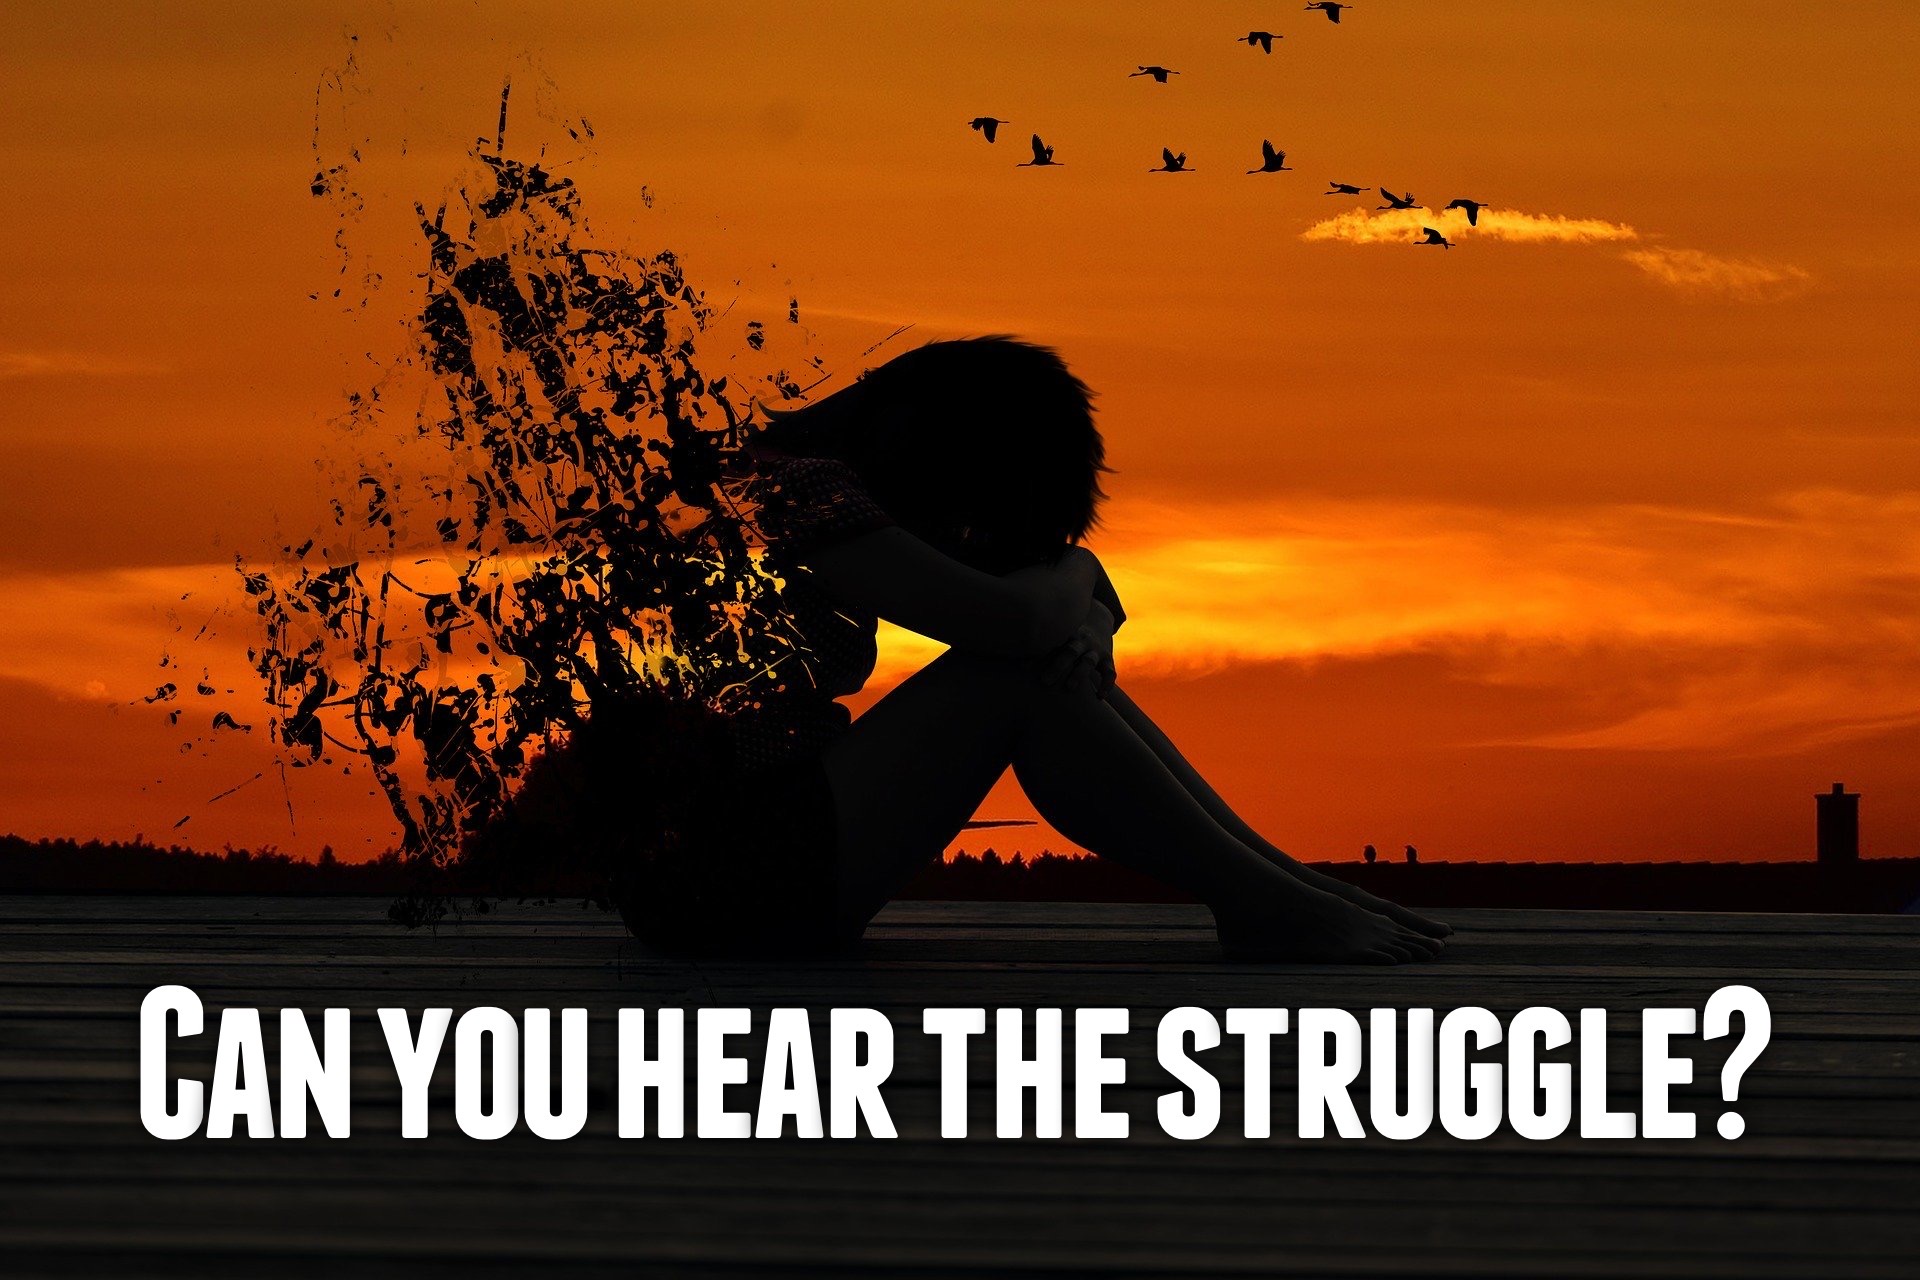 Do you hear the struggle?